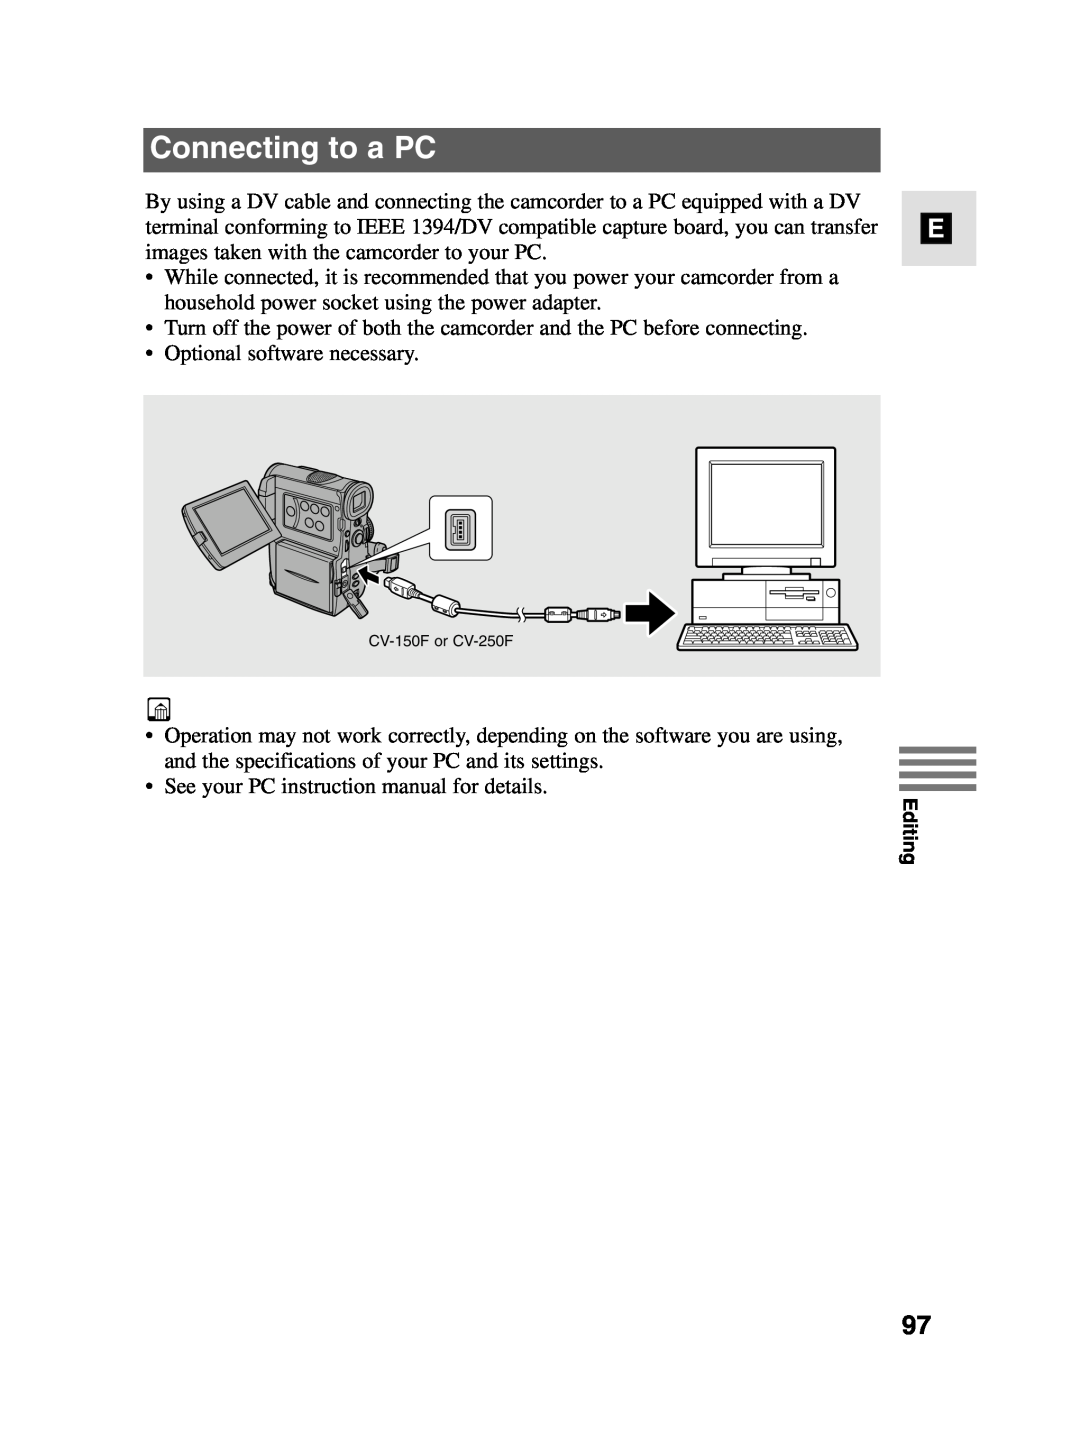 Canon MV4i MC instruction manual Connecting to a PC 